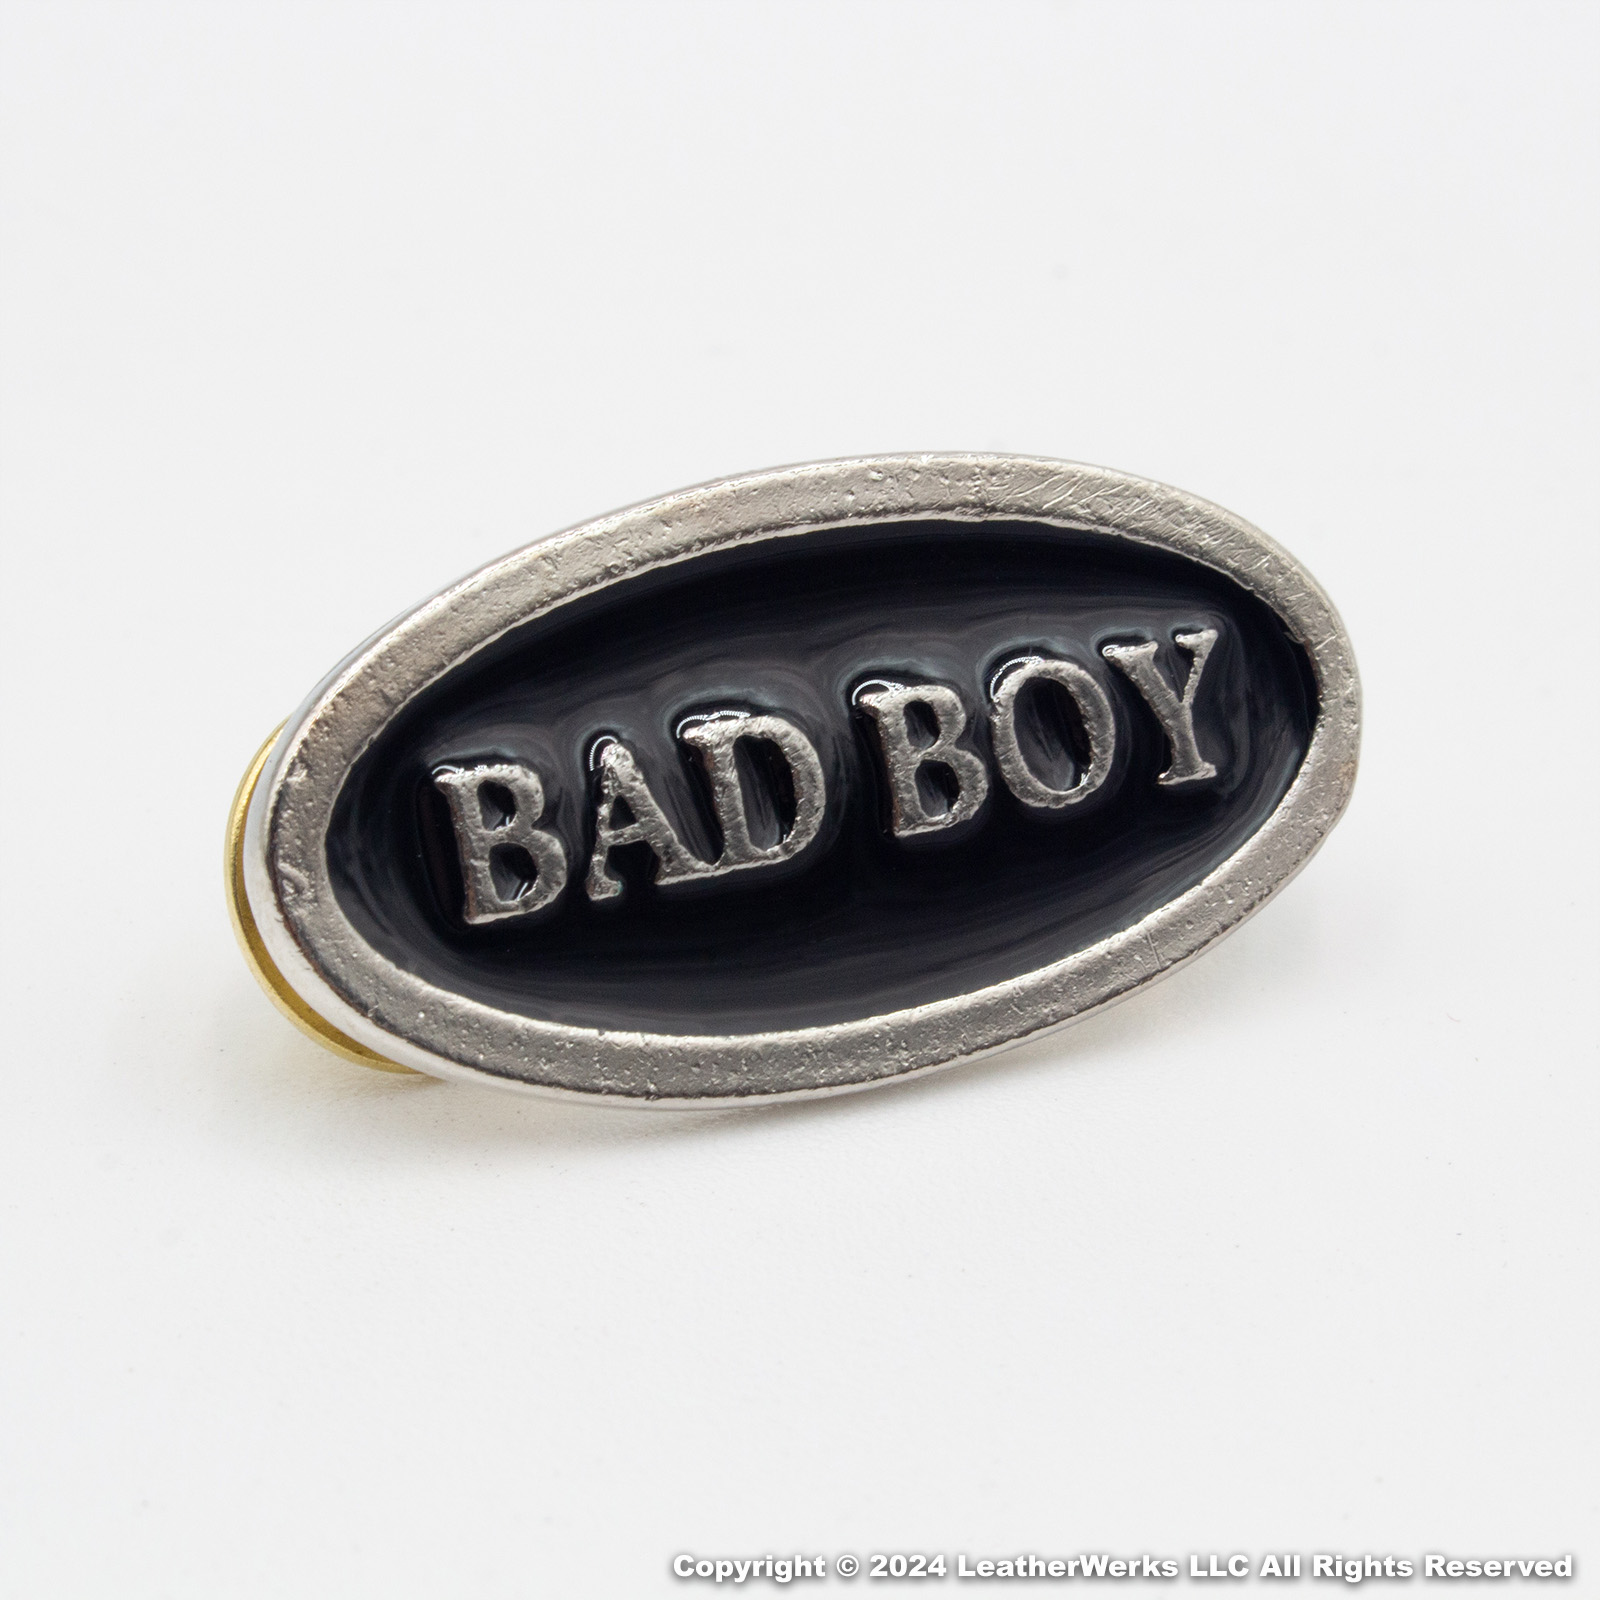 Bad Boy Pin